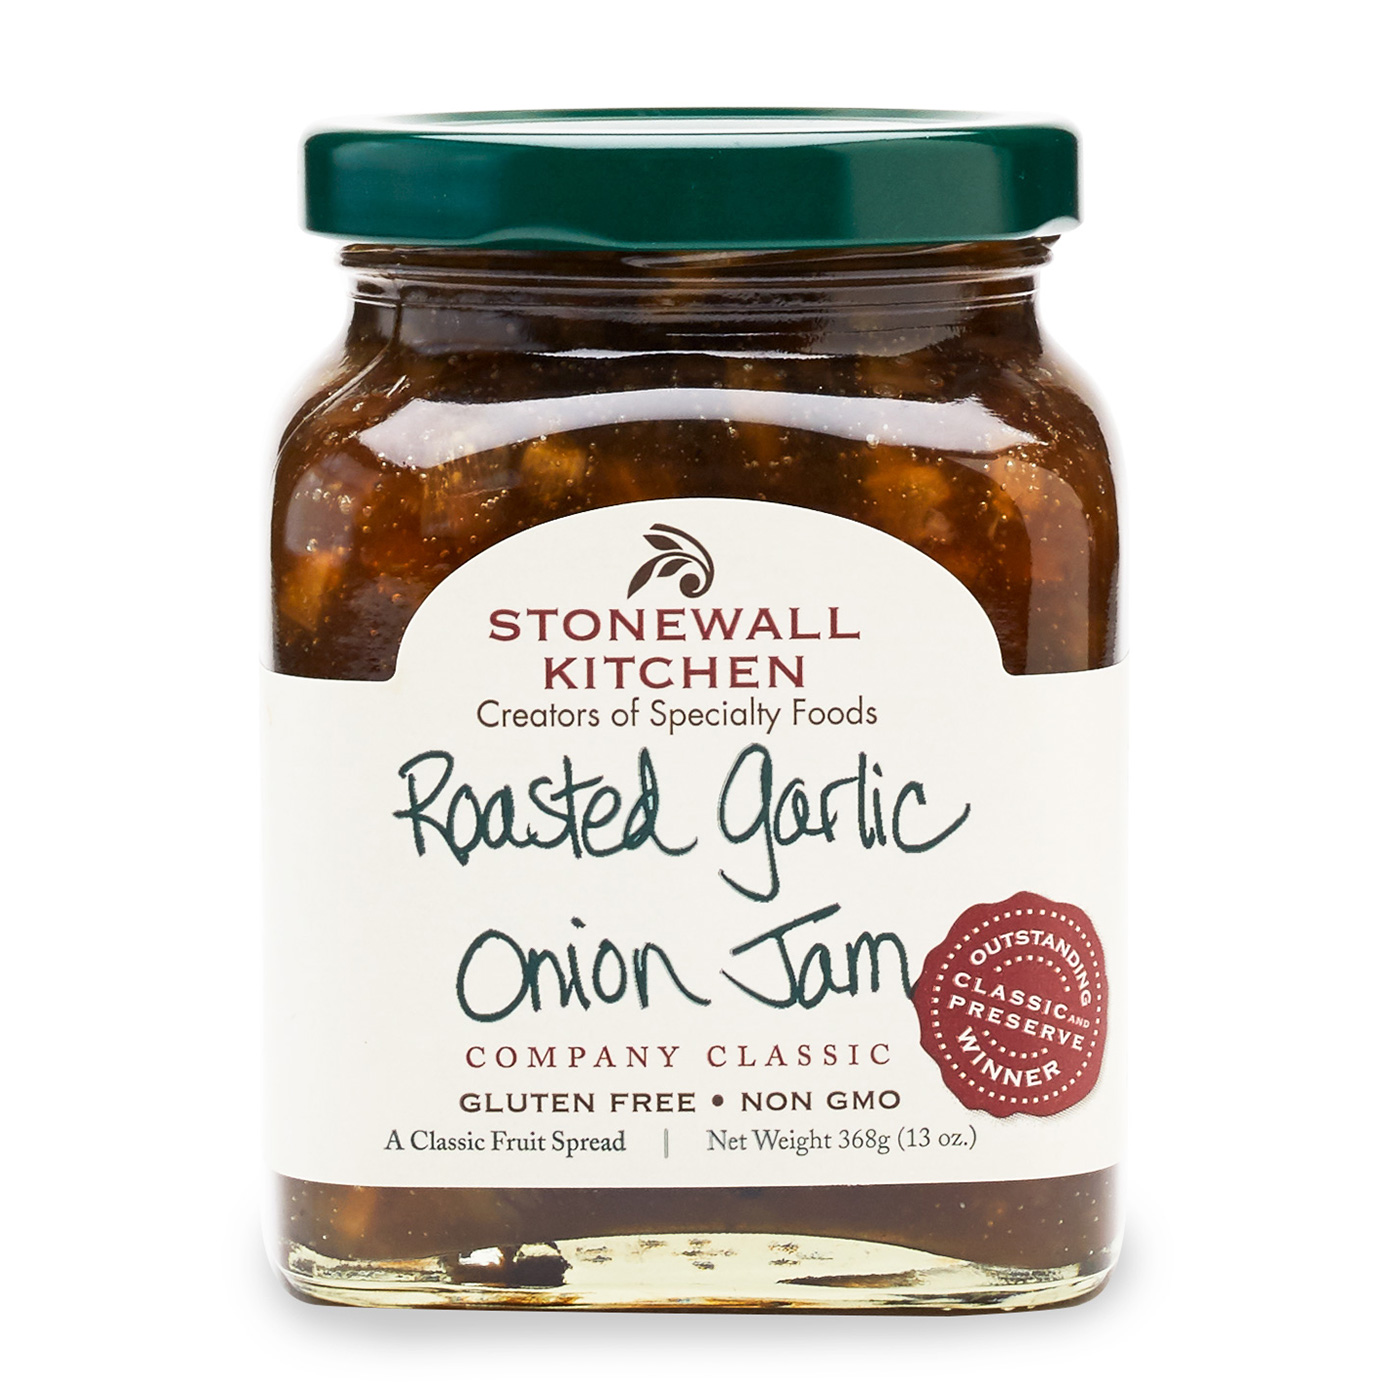 Roasted Garlic Onion Jam Jams, Preserves & Spreads Stonewall Kitchen